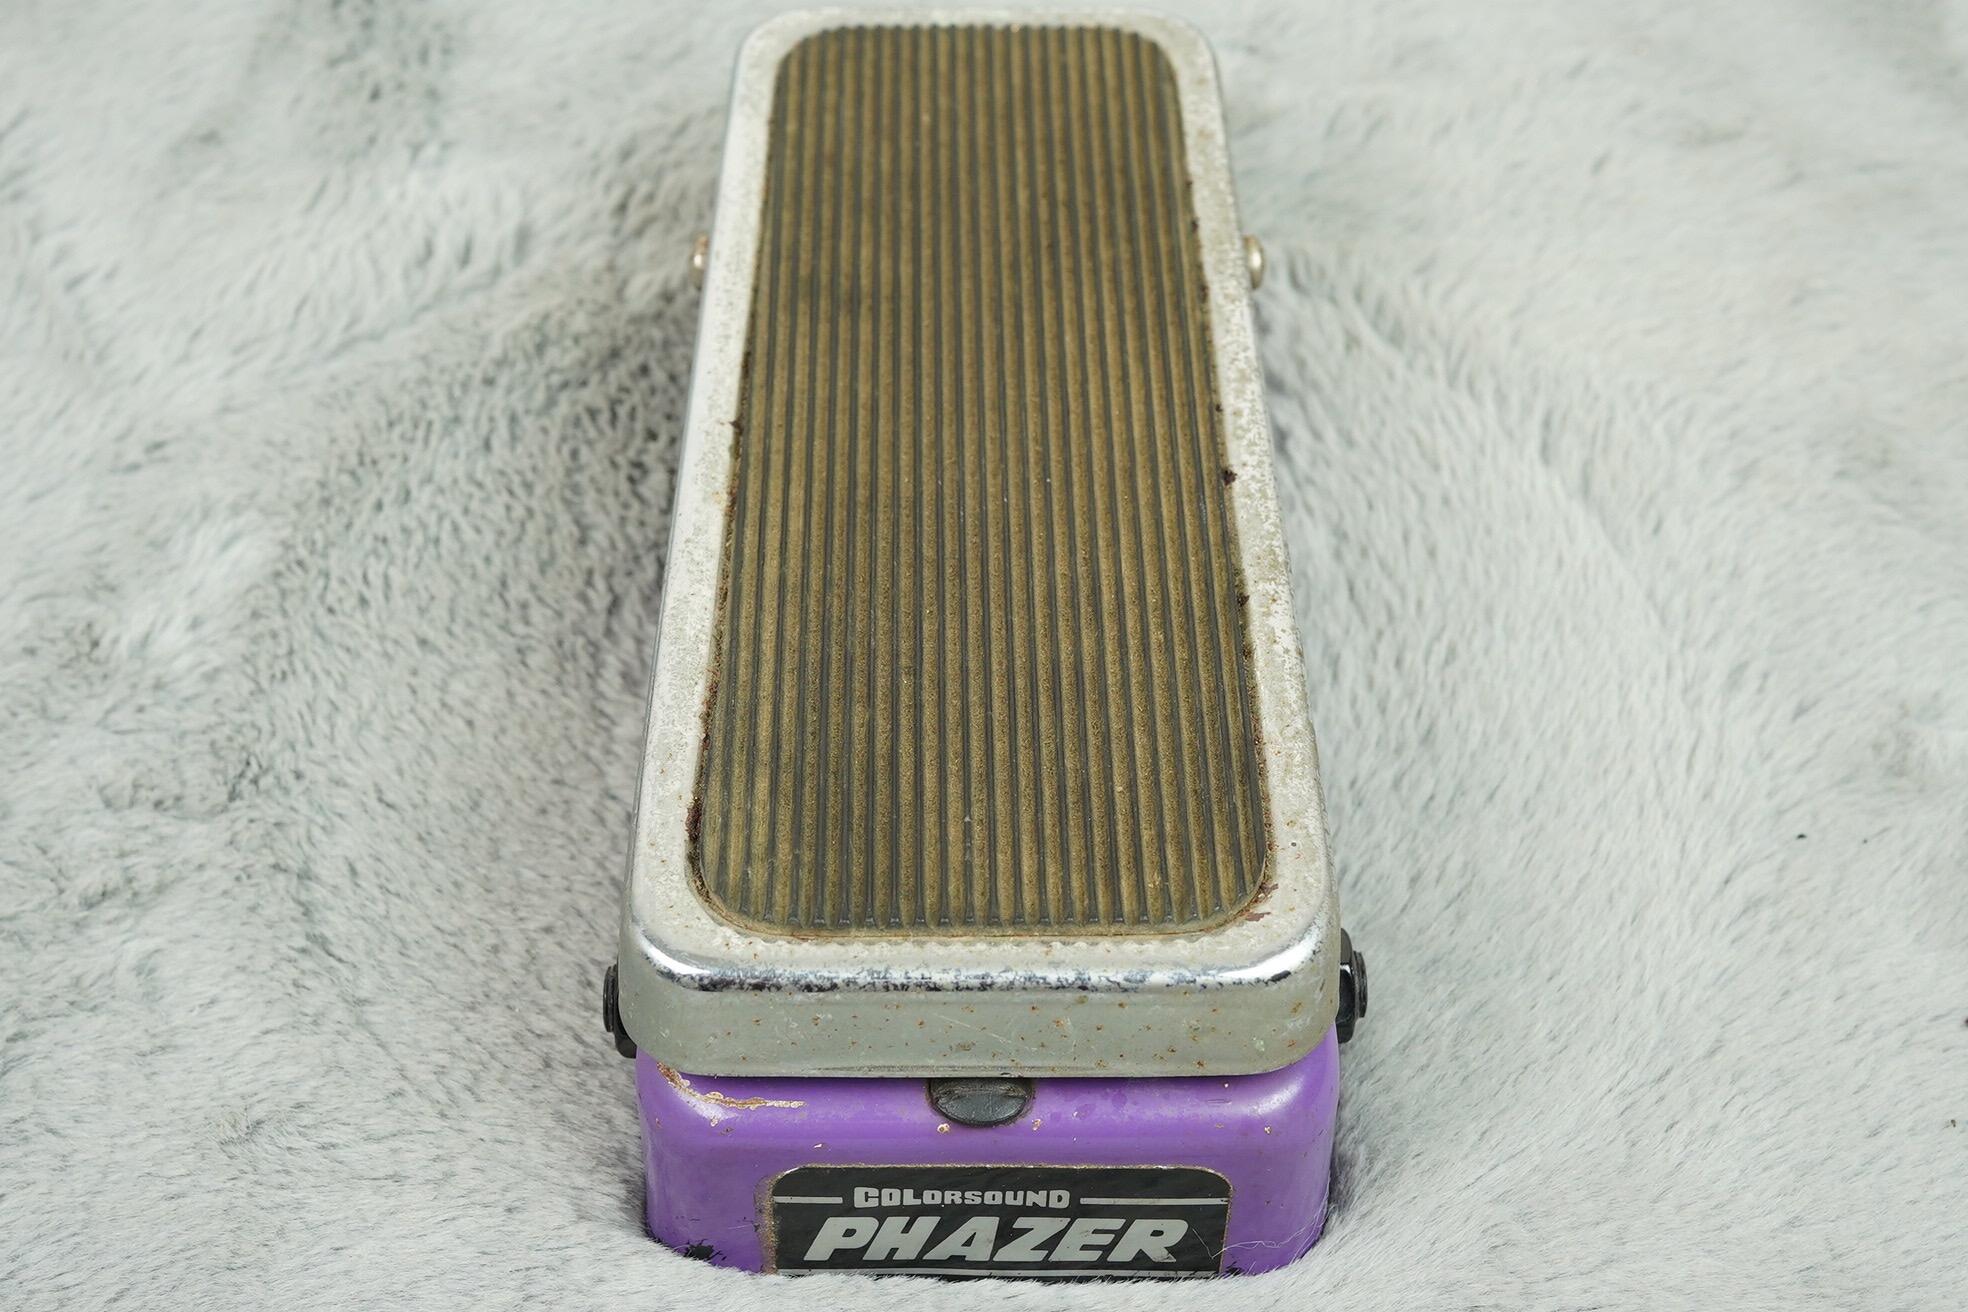 Coloursound Phazer